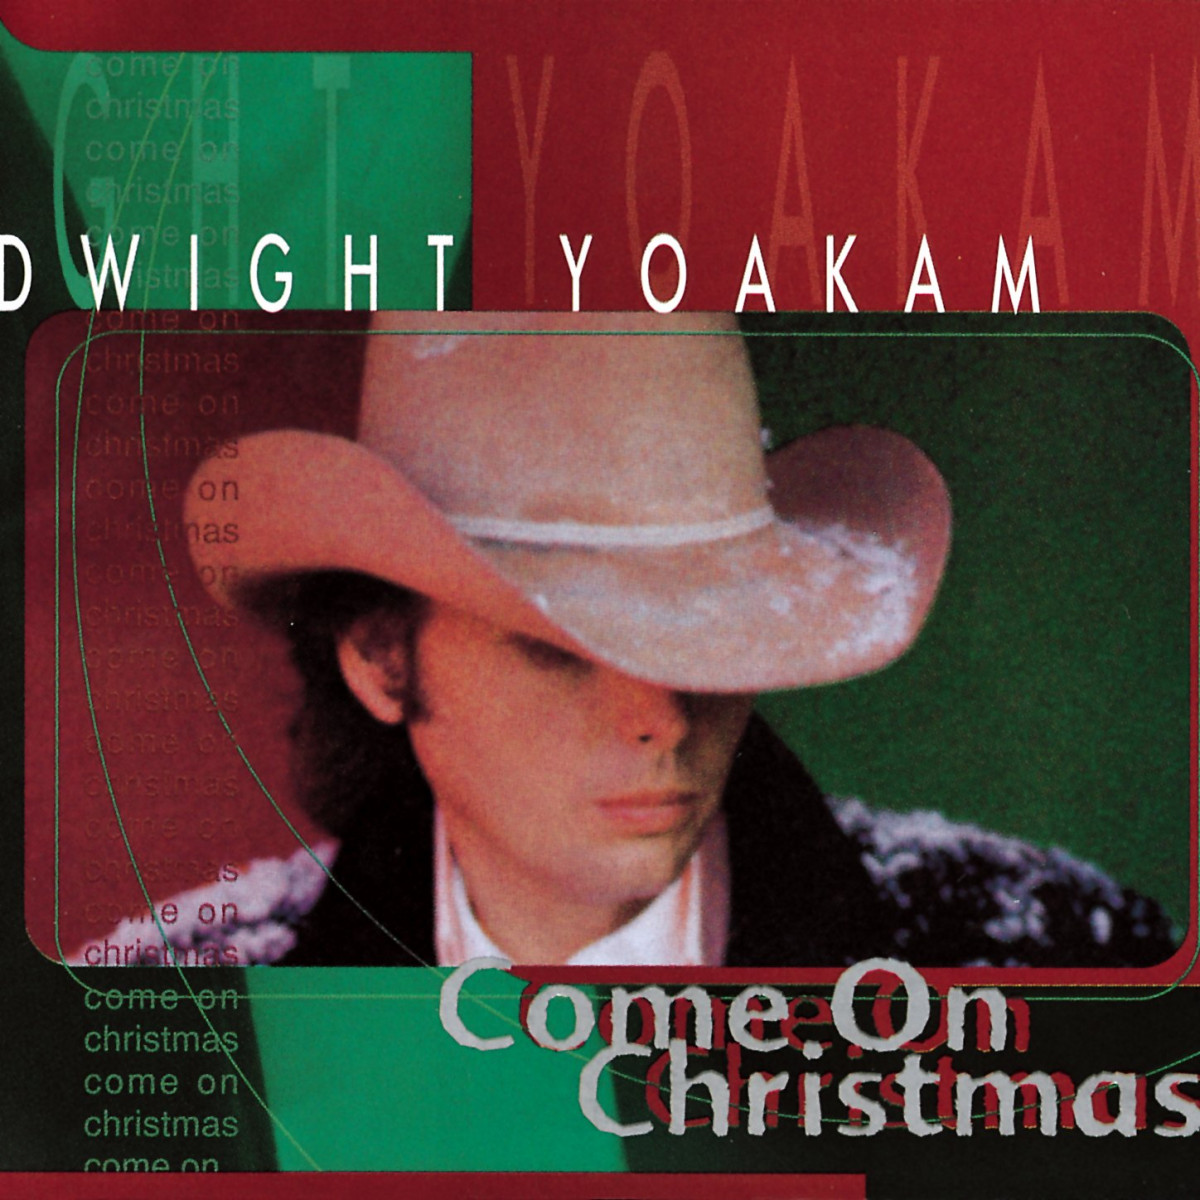 Dwight Yoakam - Come on Christmas